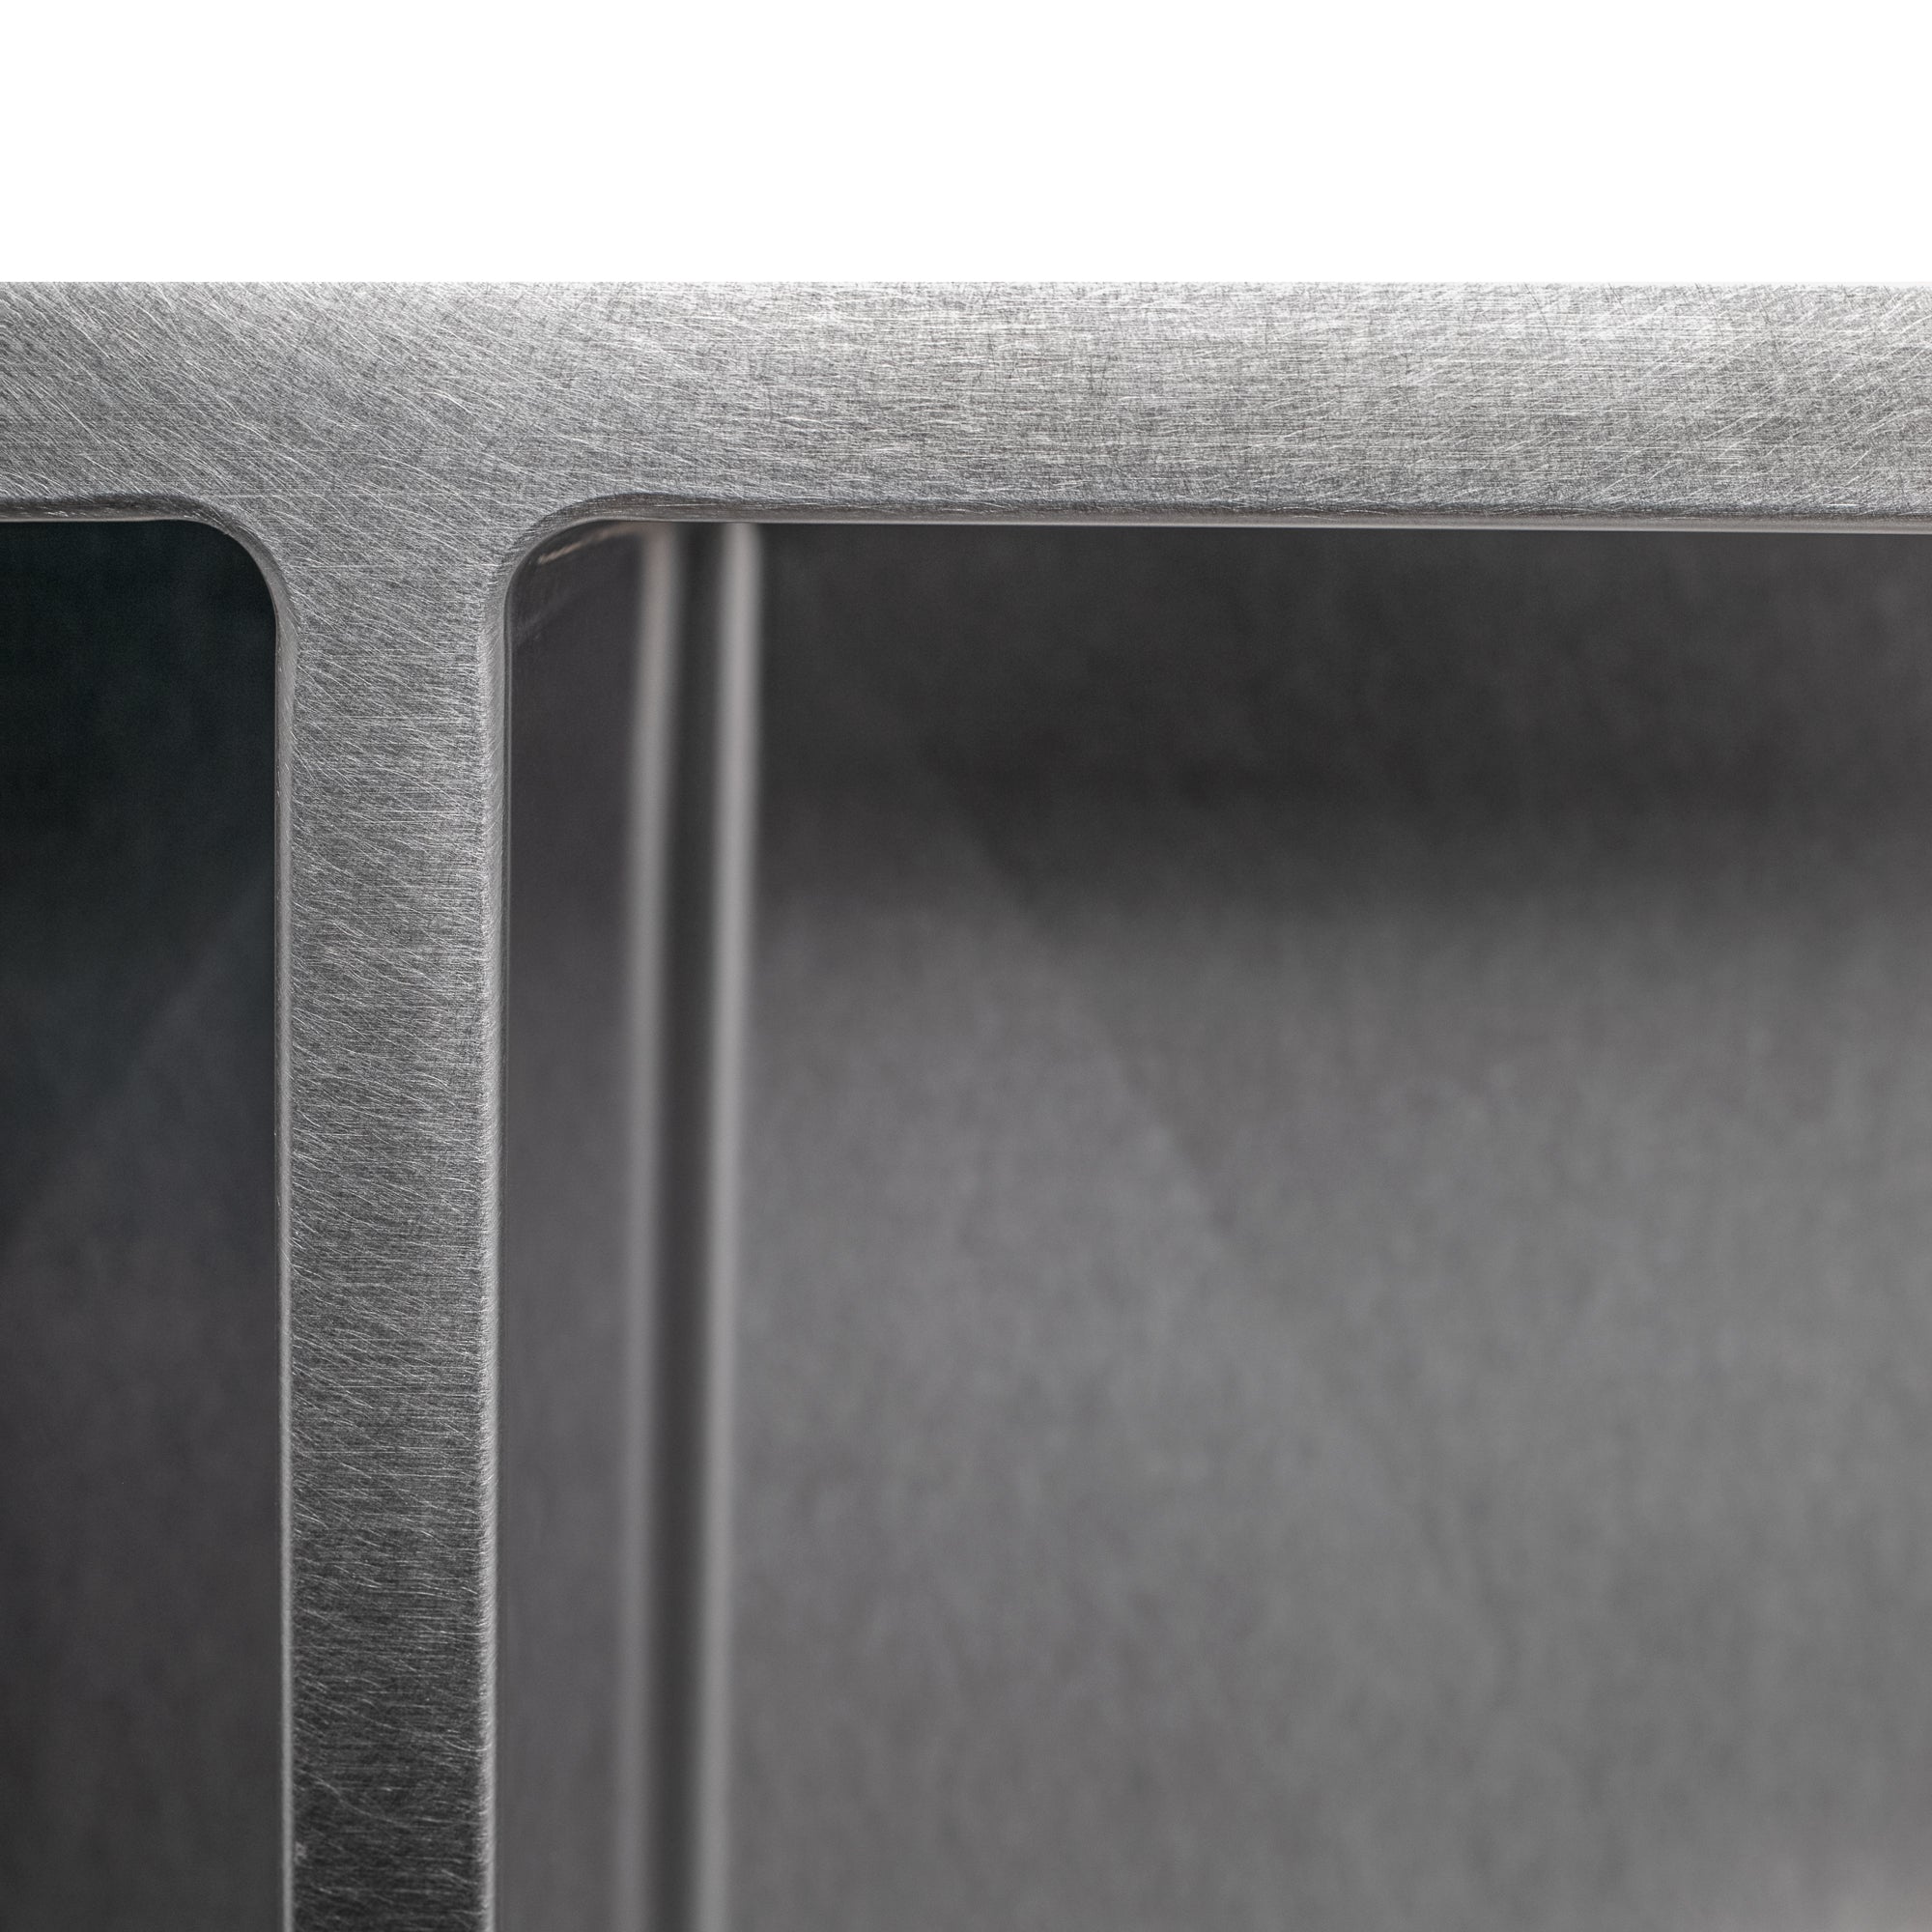 ZLINE 36" Anton Undermount Double Bowl Scratch Resistant Stainless Steel Kitchen Sink with Bottom Grid (SR50D-36S)